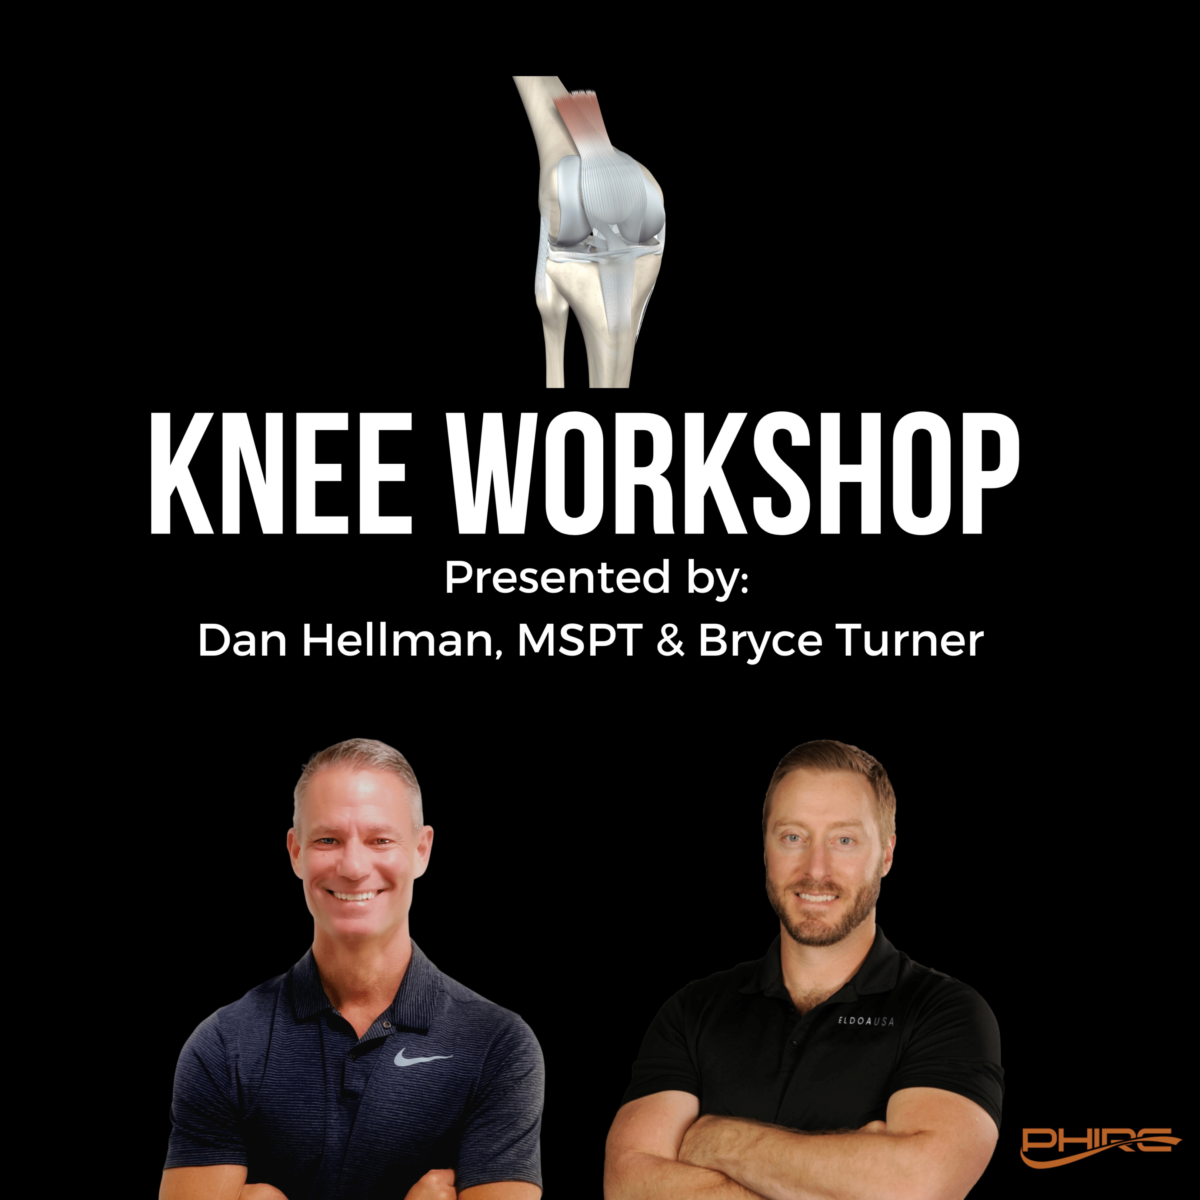 The Knee Workshop